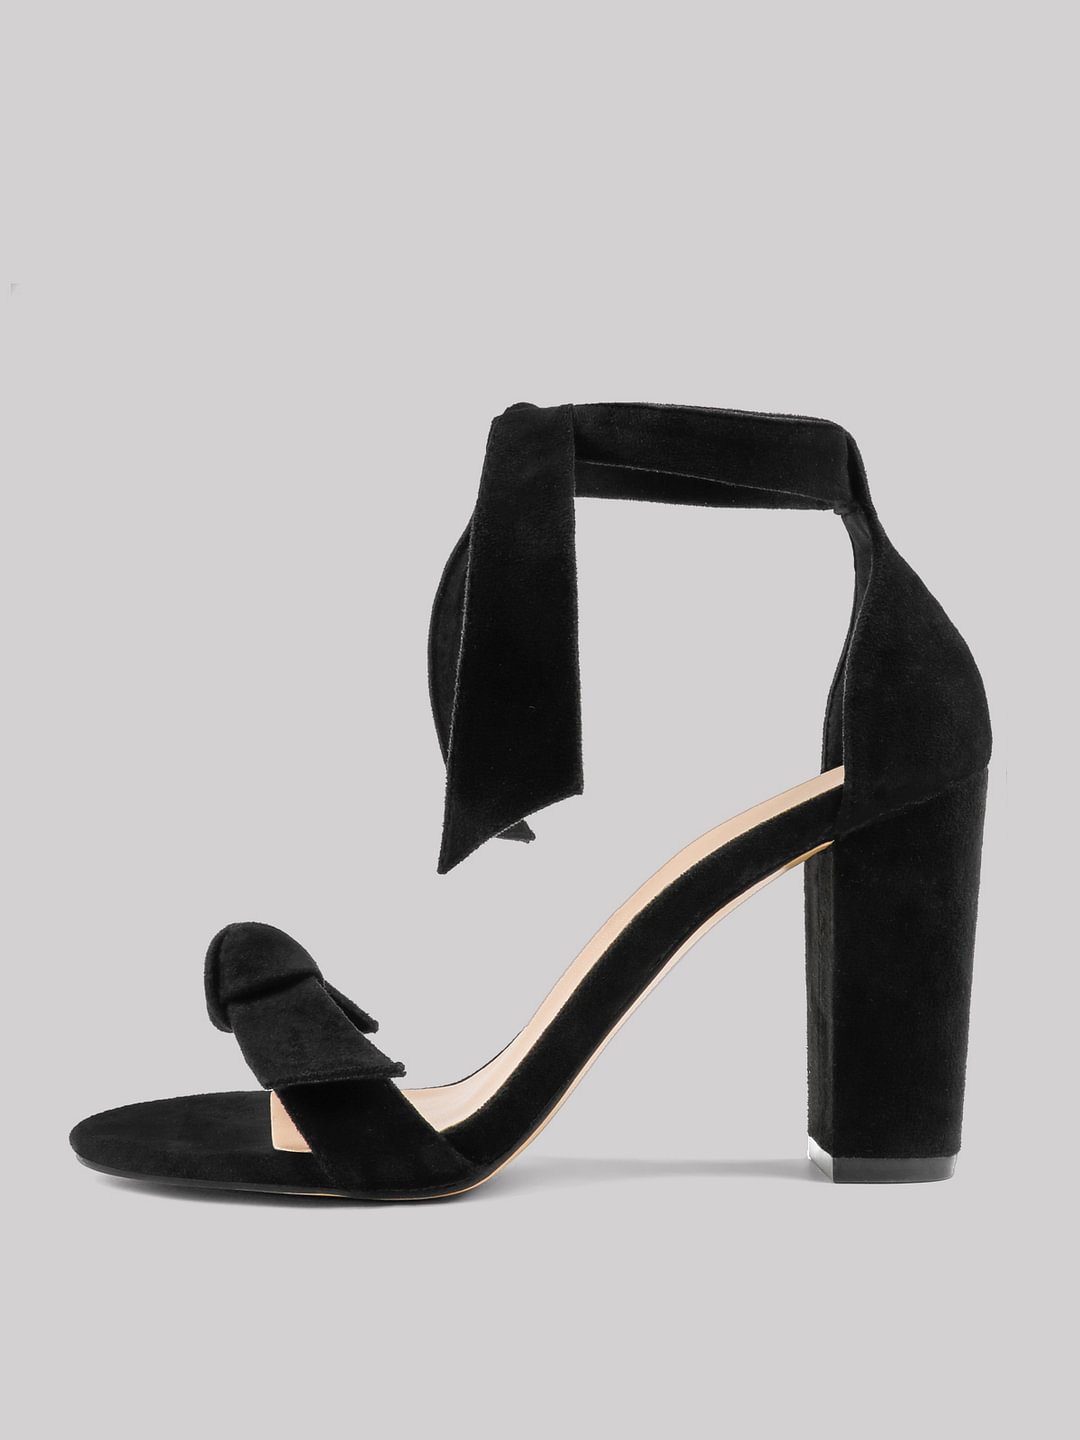 90mm Women's Bowknot Ankle Strap Pumps Block Heel Dress Party Suede Sandals Summer Shoes